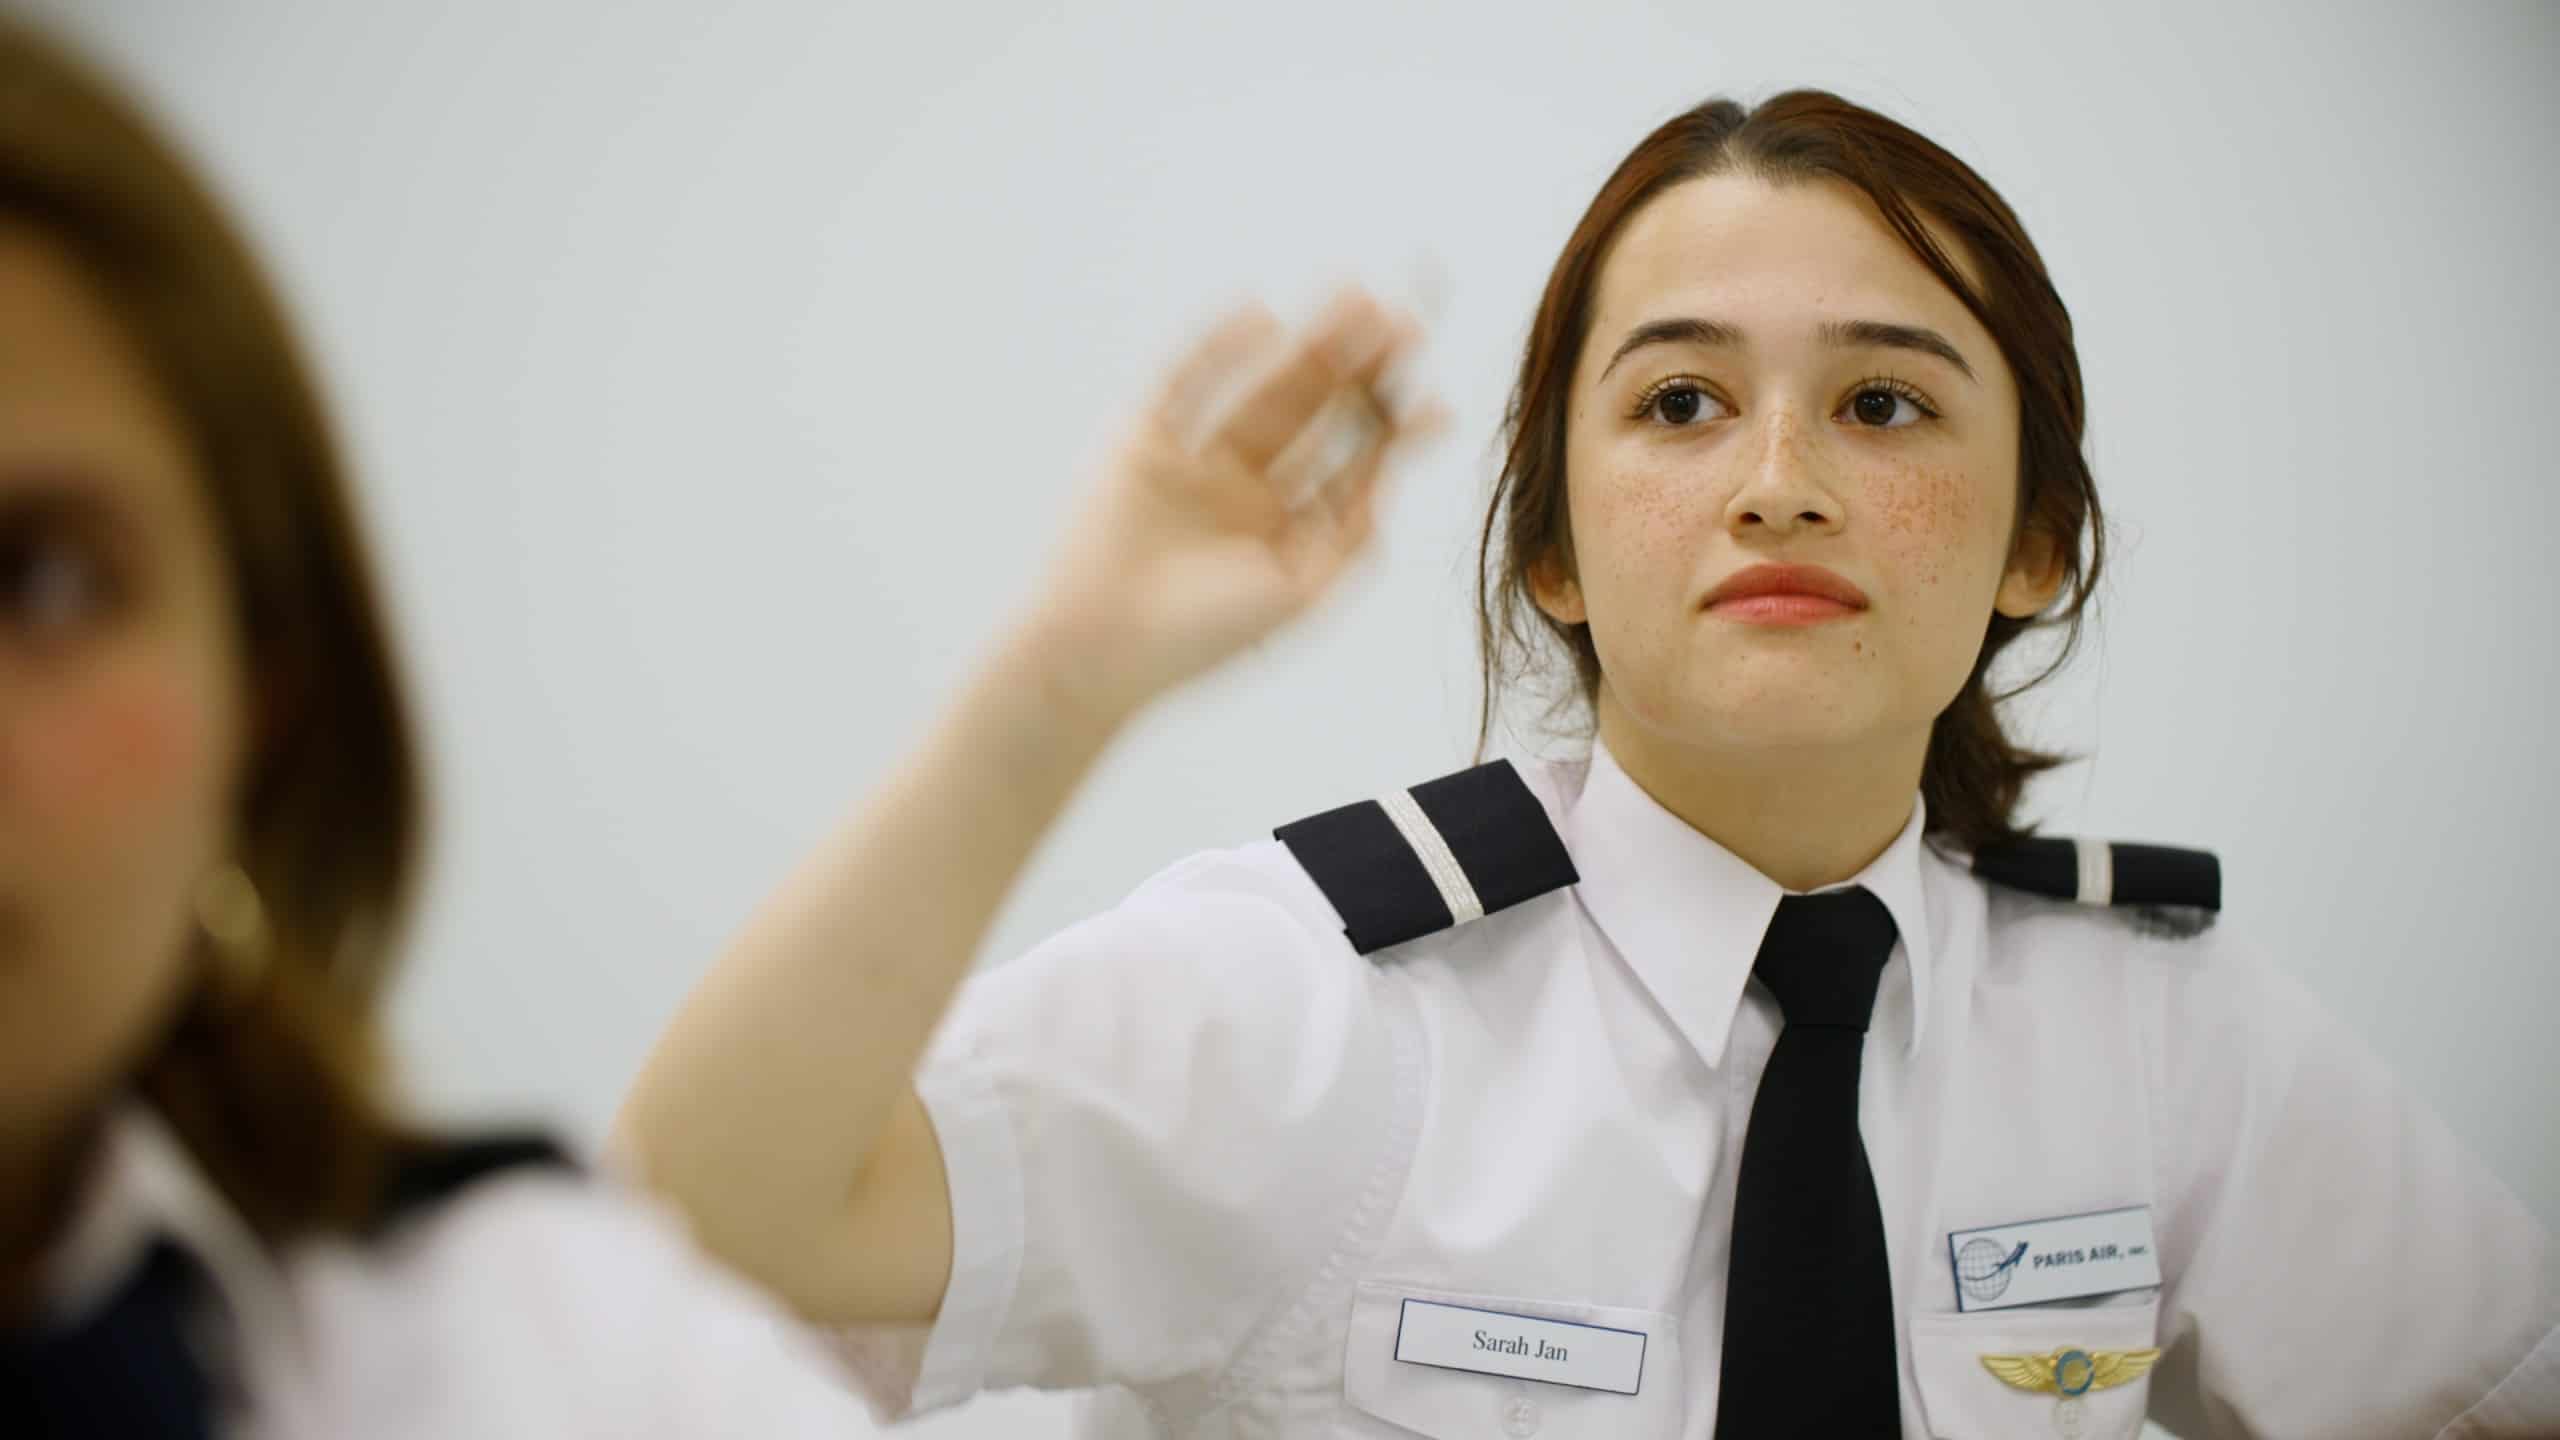 A Paris Air flight student raises her hand